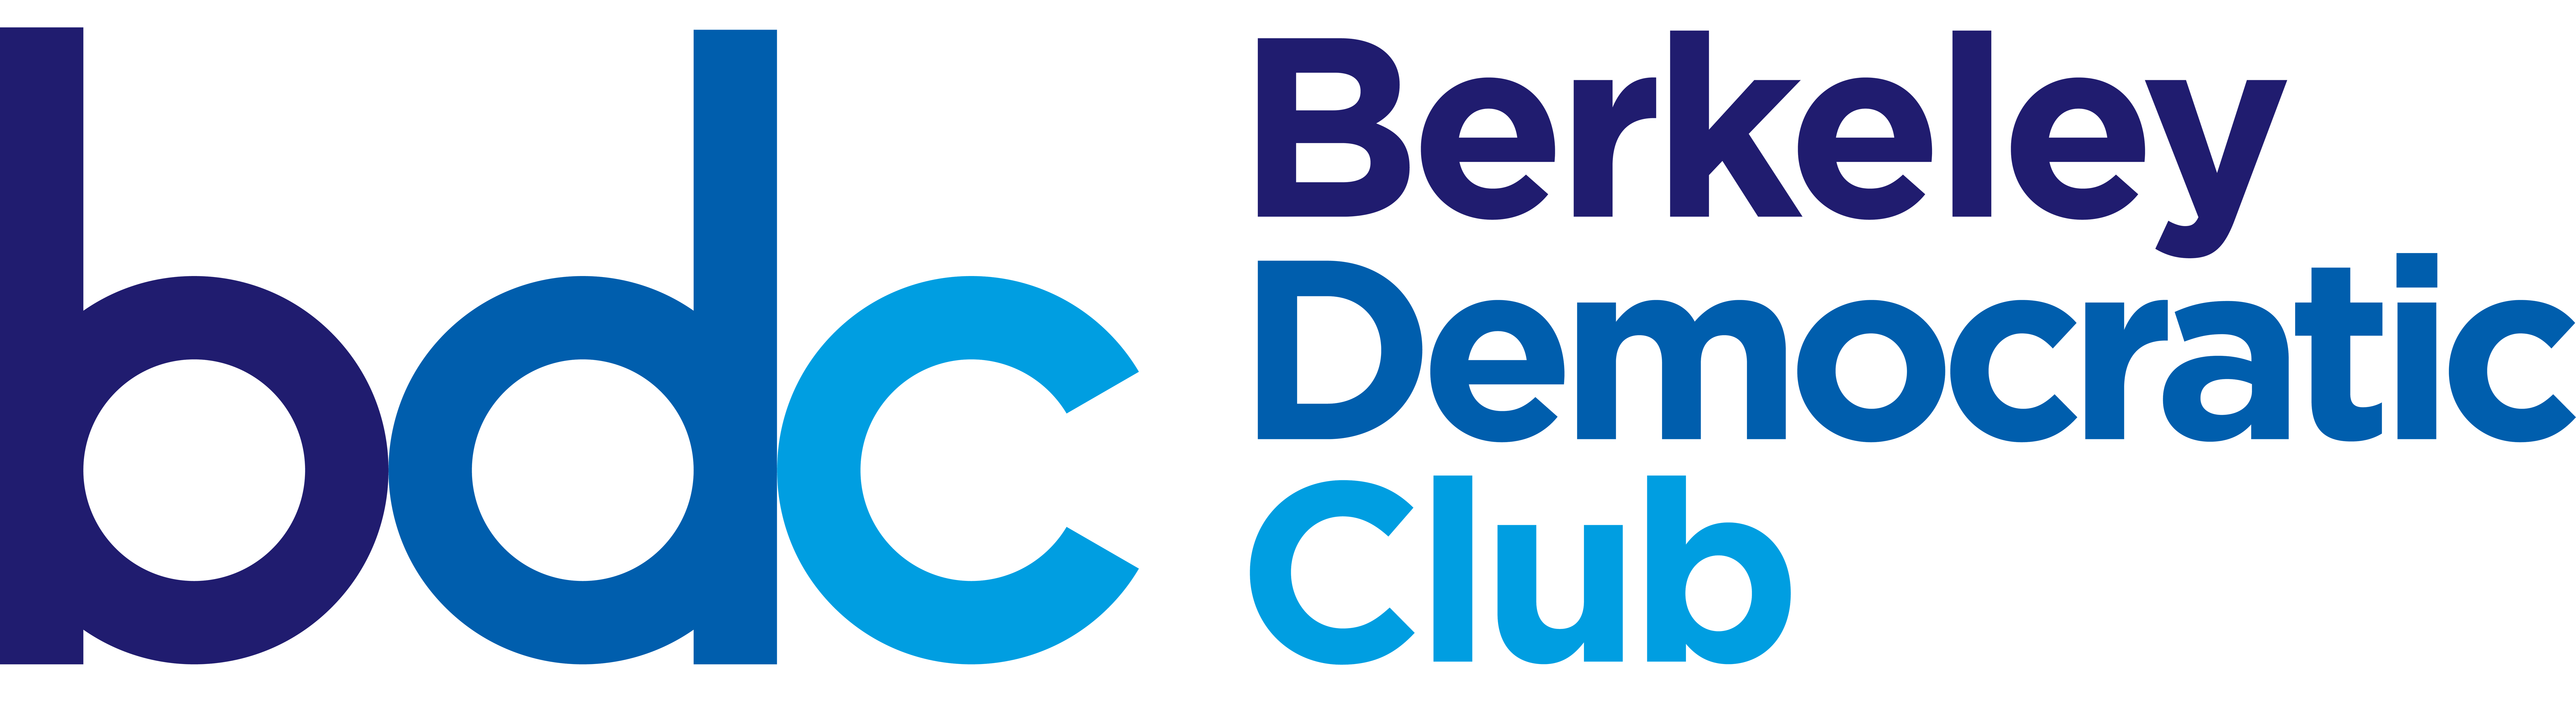 Berkeley Democratic Club